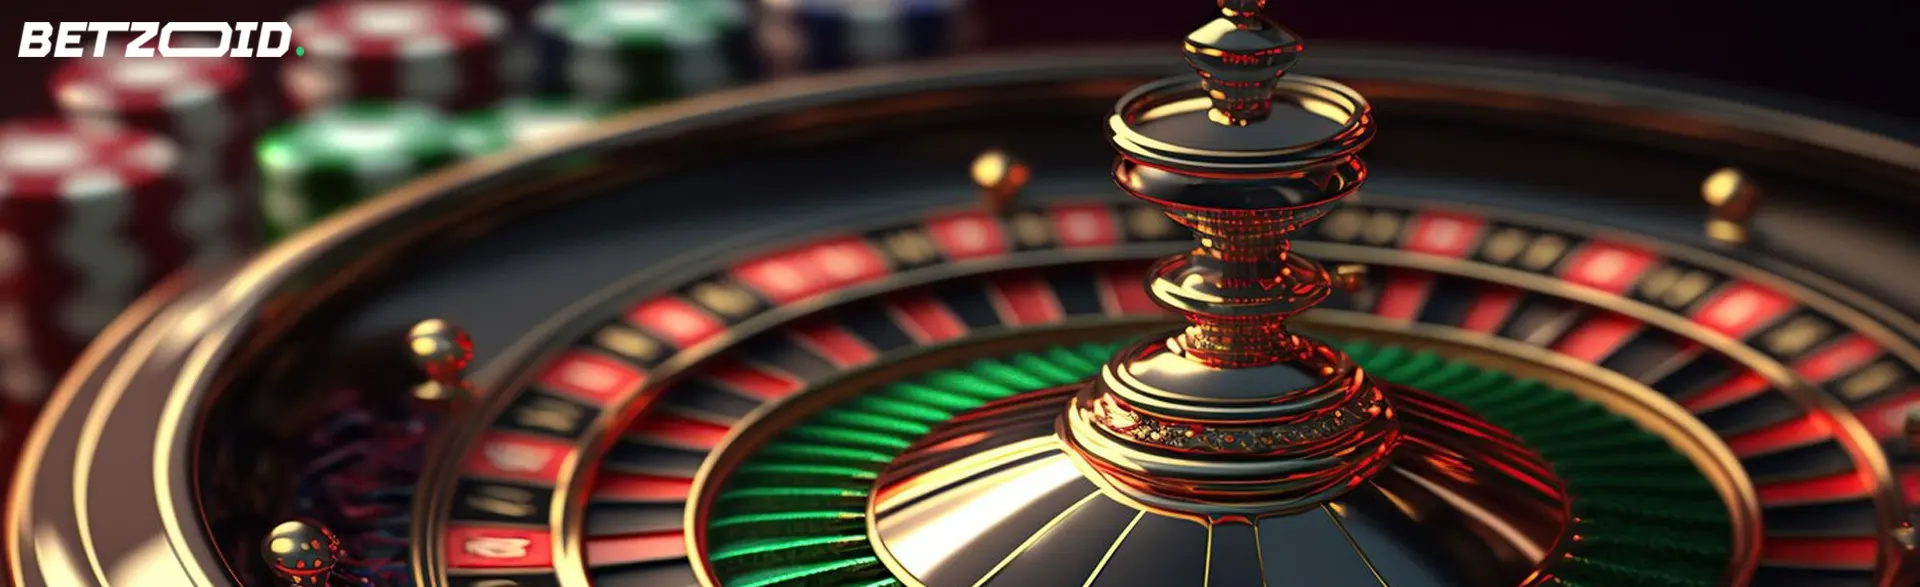 Online roulette australian casinos.